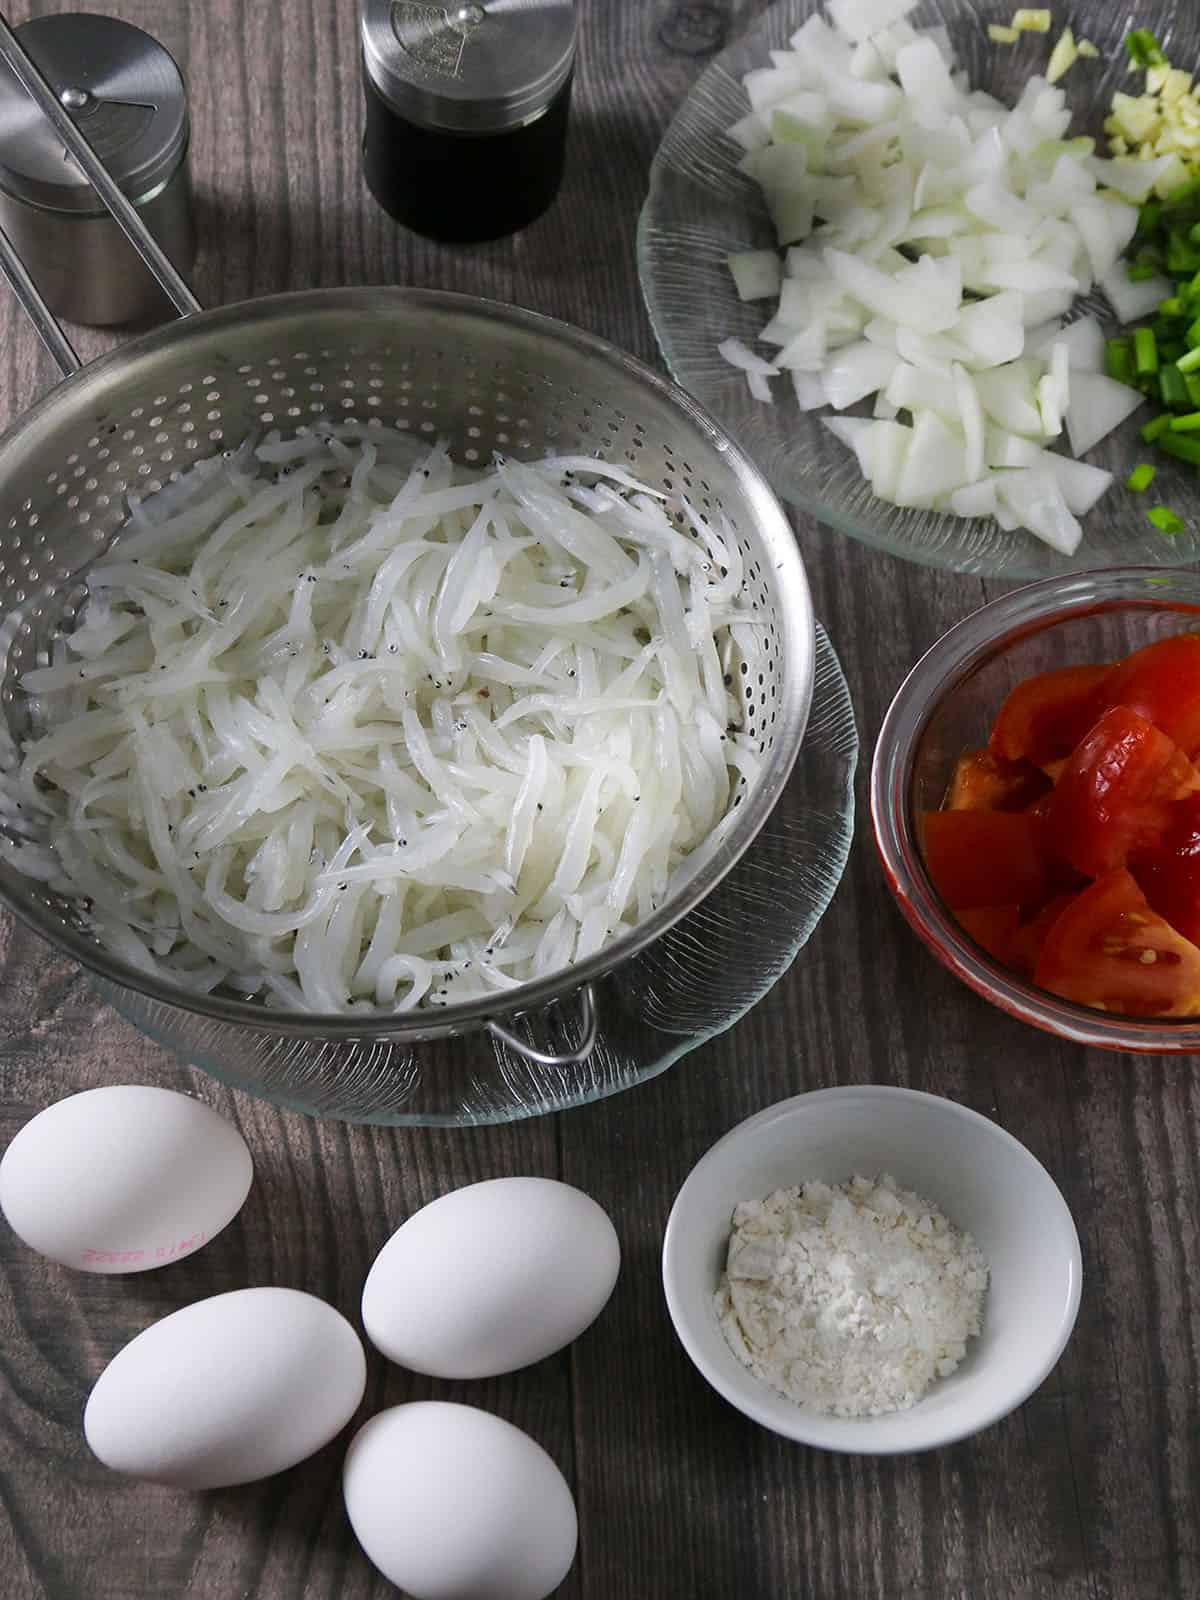 silverfish, eggs, tomatoes, onions, green onions, flour